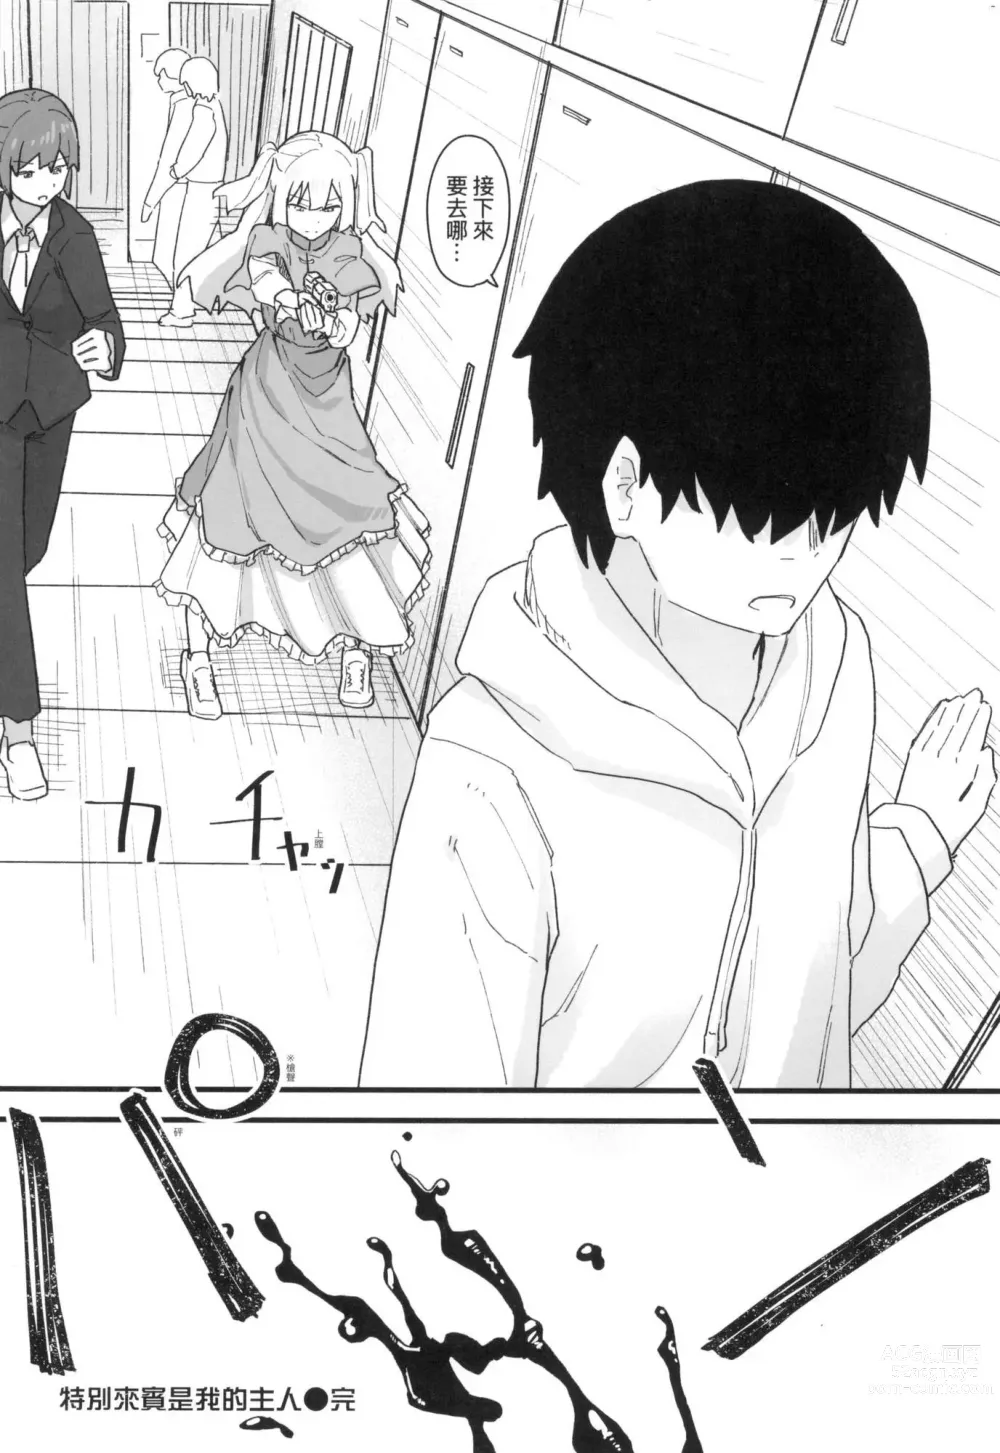 Page 148 of manga 常識改變活動紀錄 (decensored)